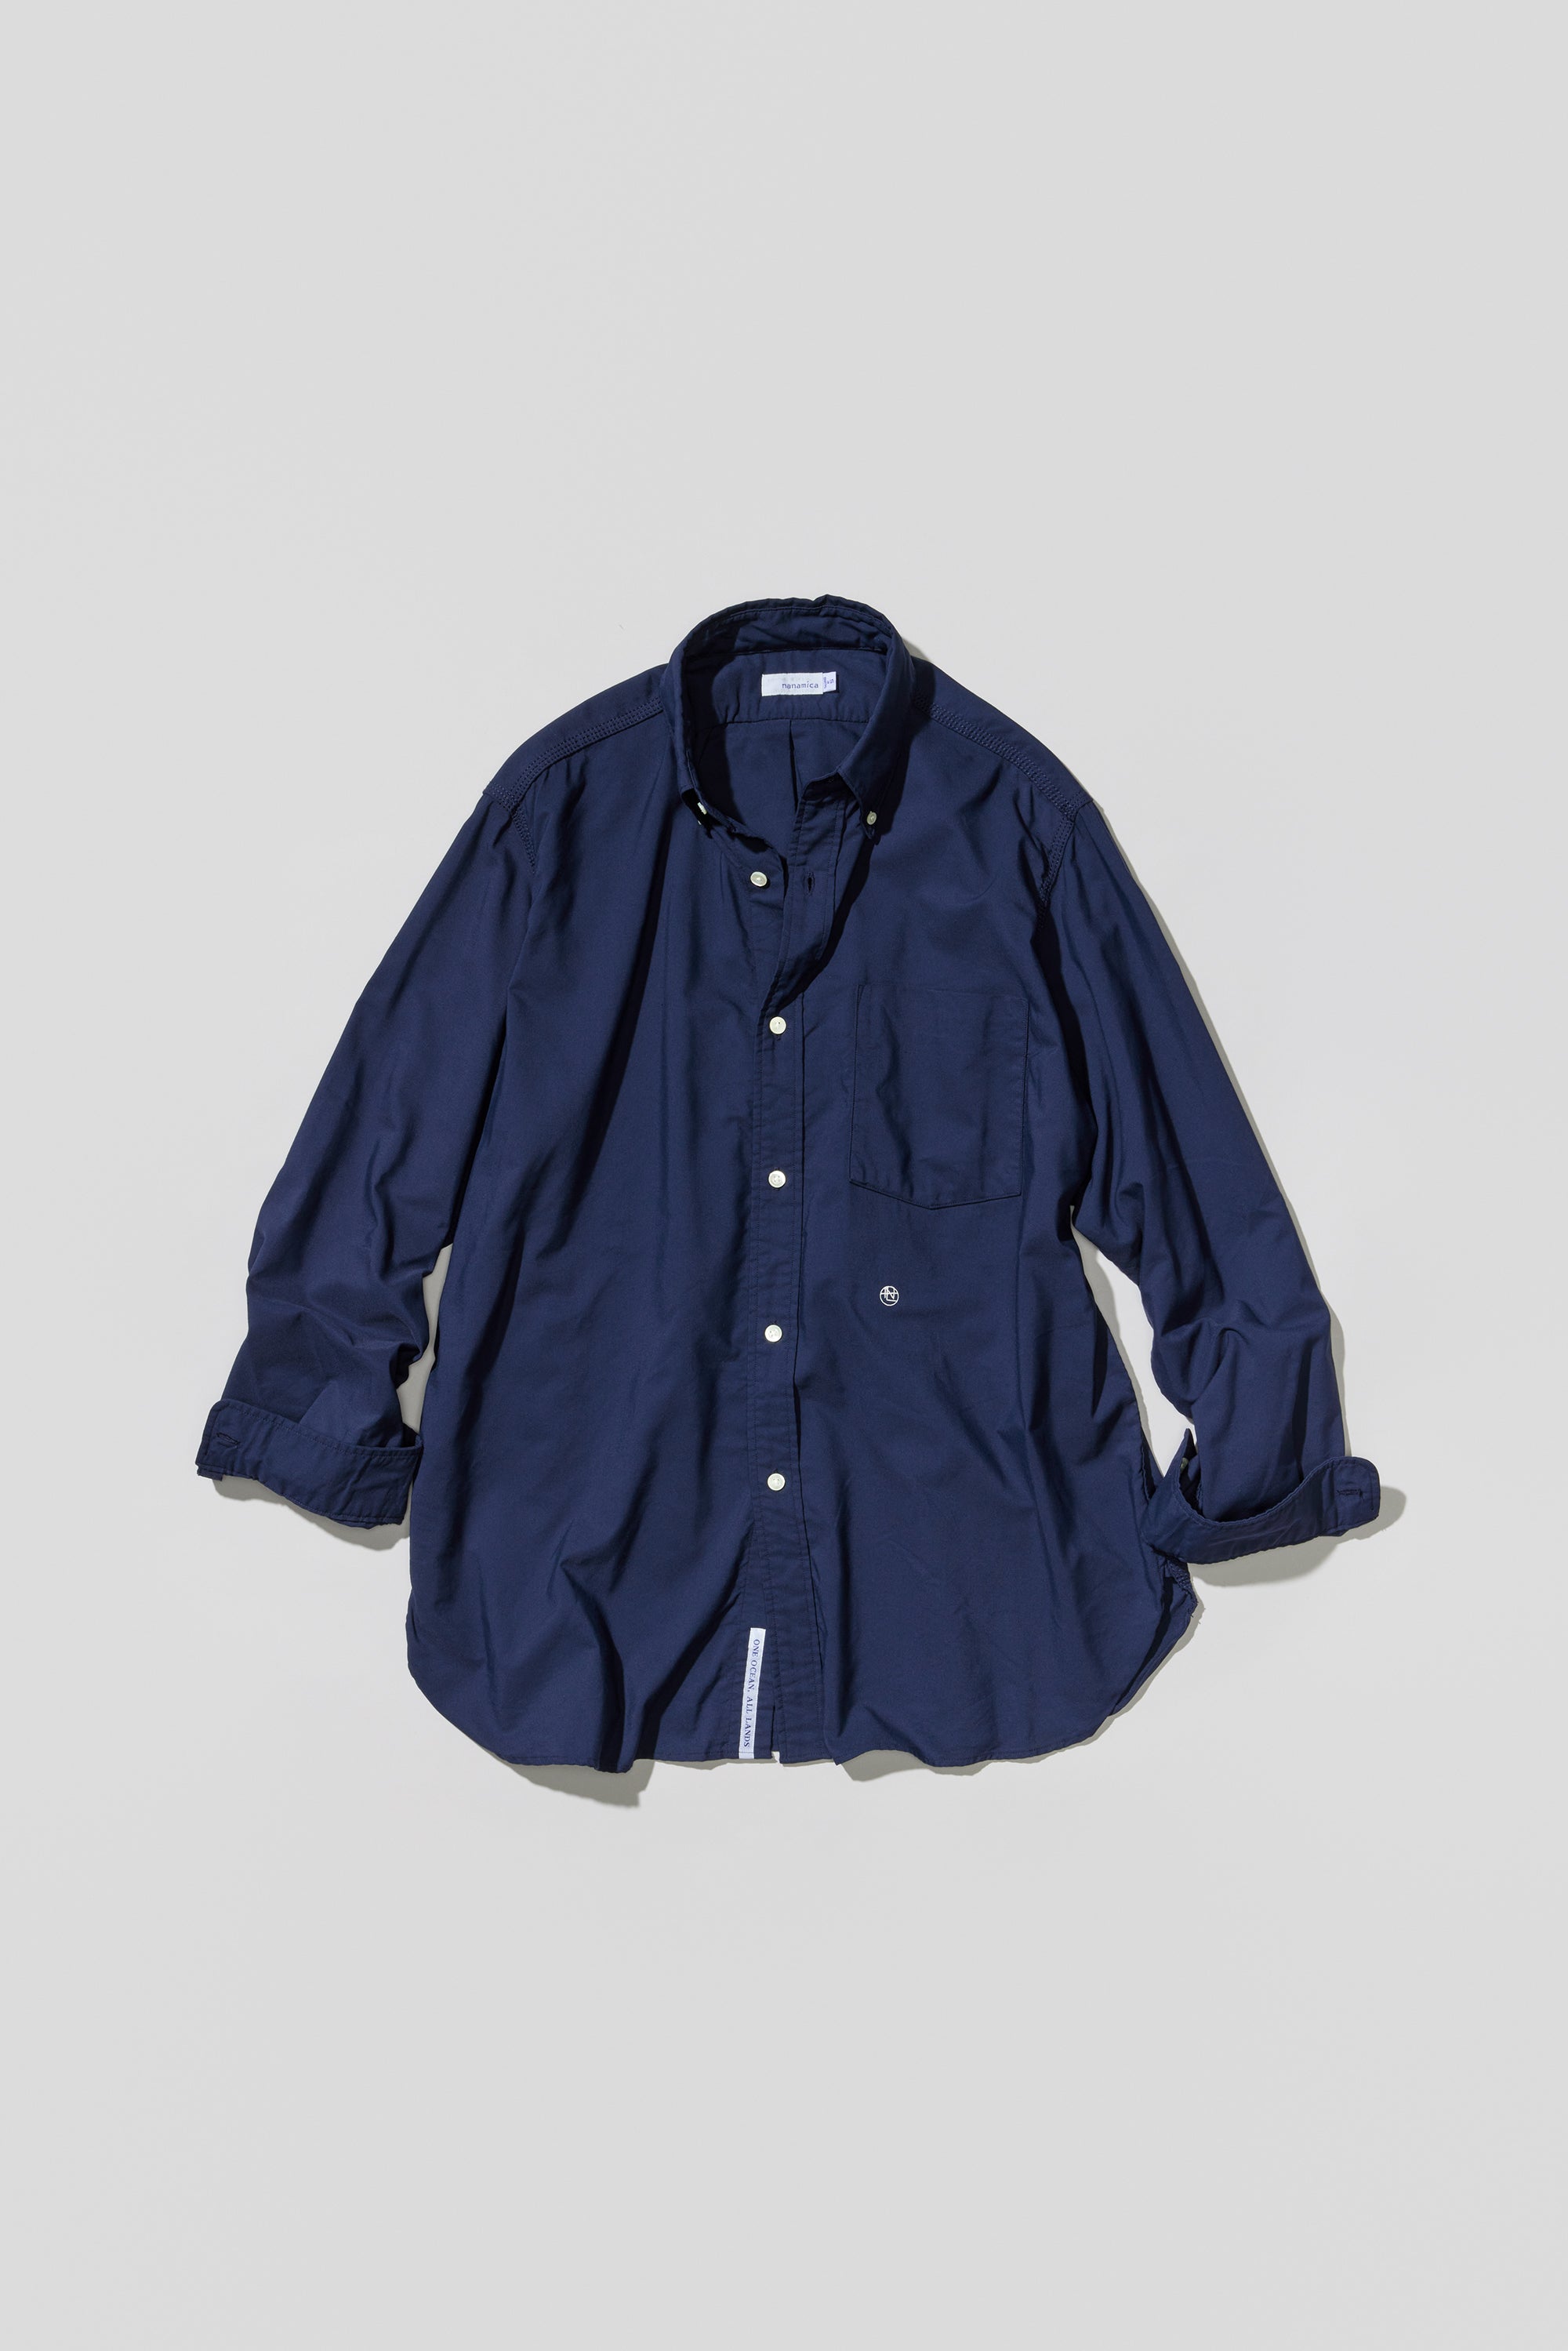 About nanamica clothes Vol. 15 “A shirt’s median plane.” – nanamica NEW ...